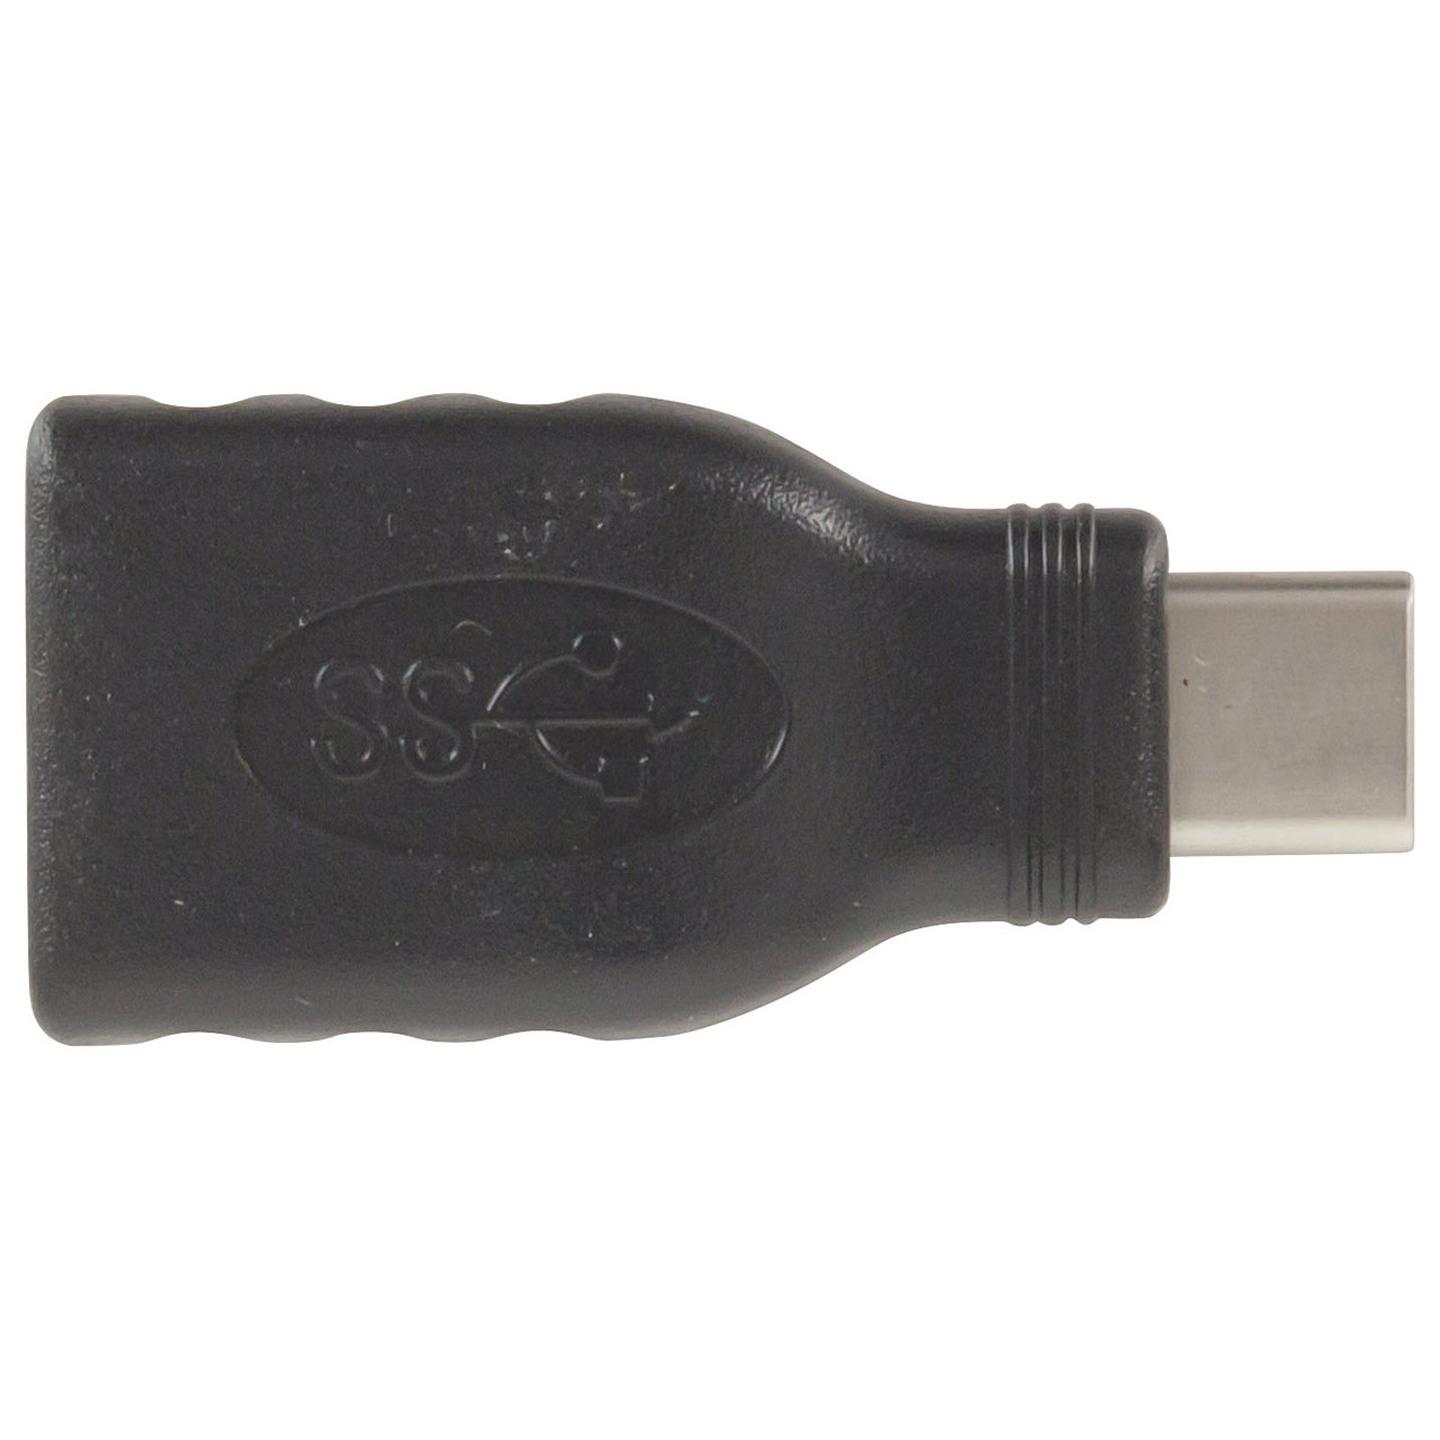 USB 3.0 Type-C to Socket Adaptor